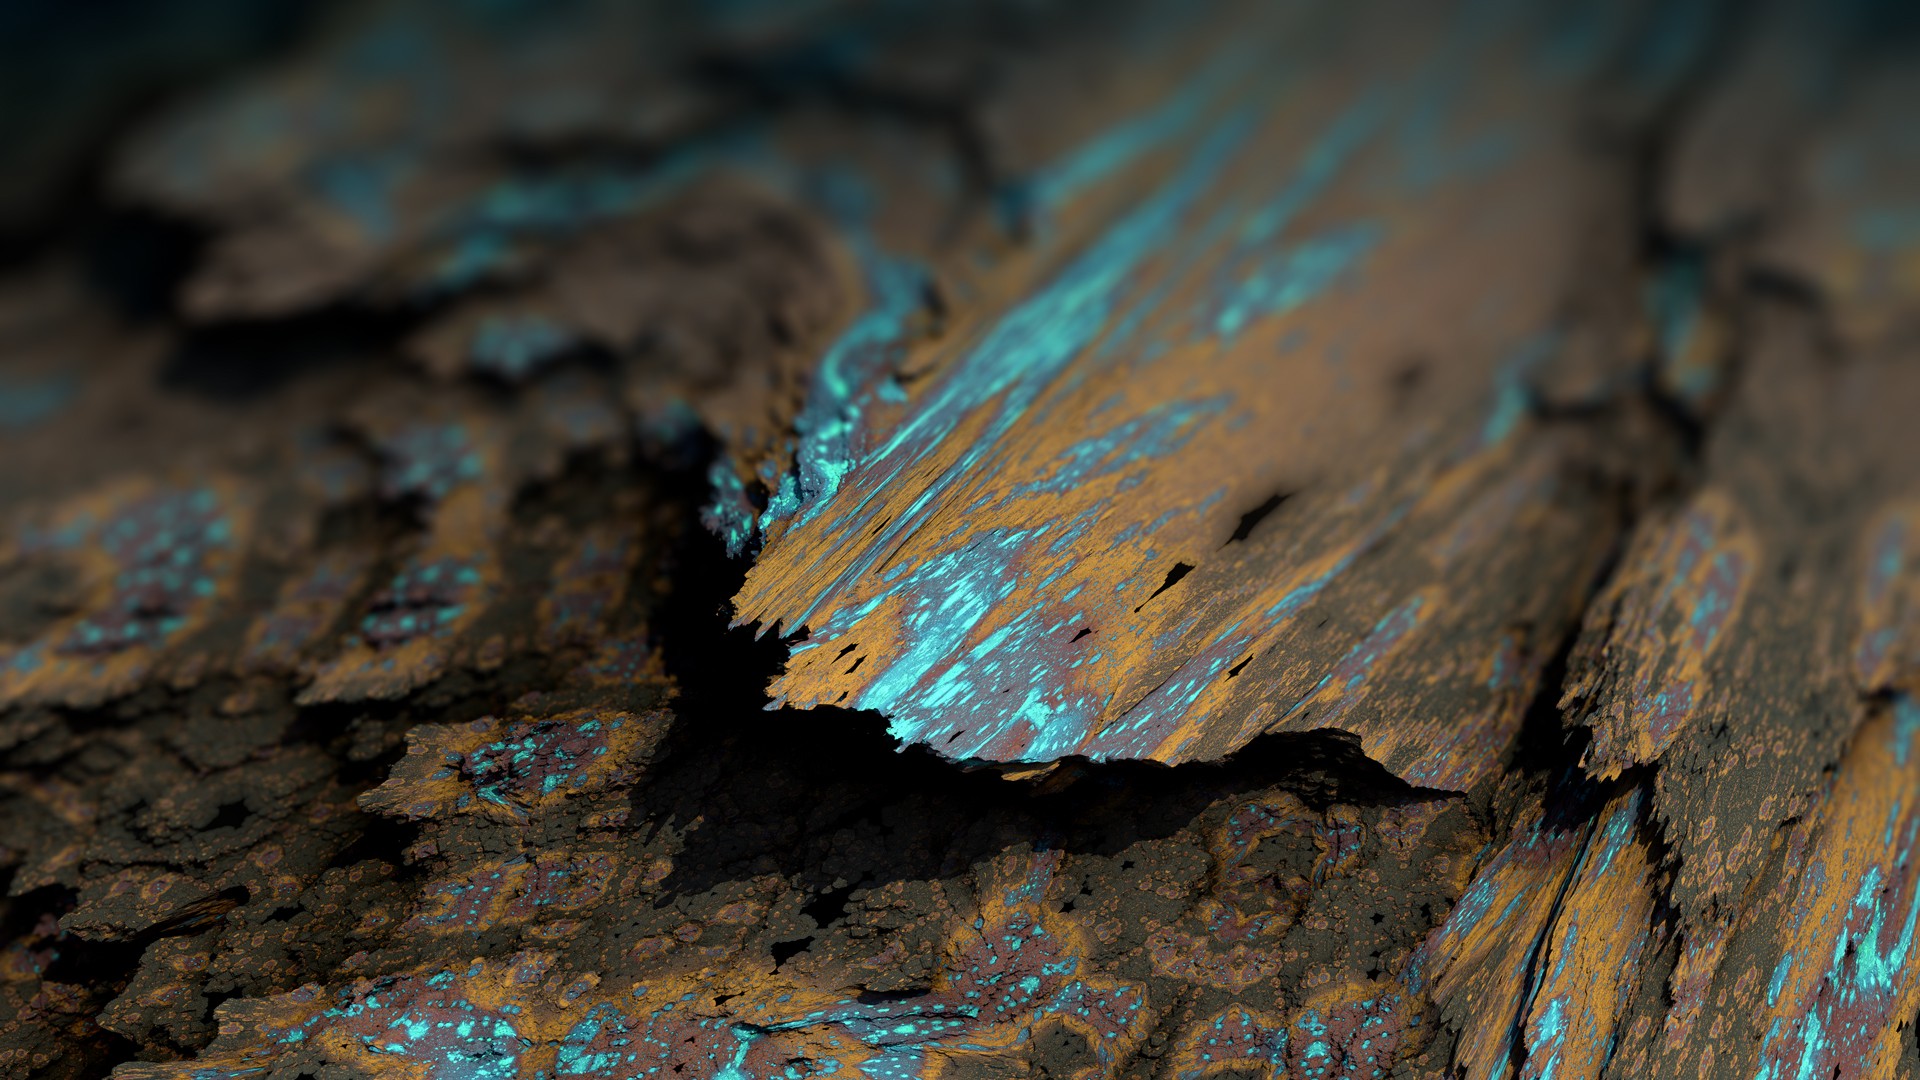 General 1920x1080 Procedural Minerals mineral brown artwork abstract digital art depth of field